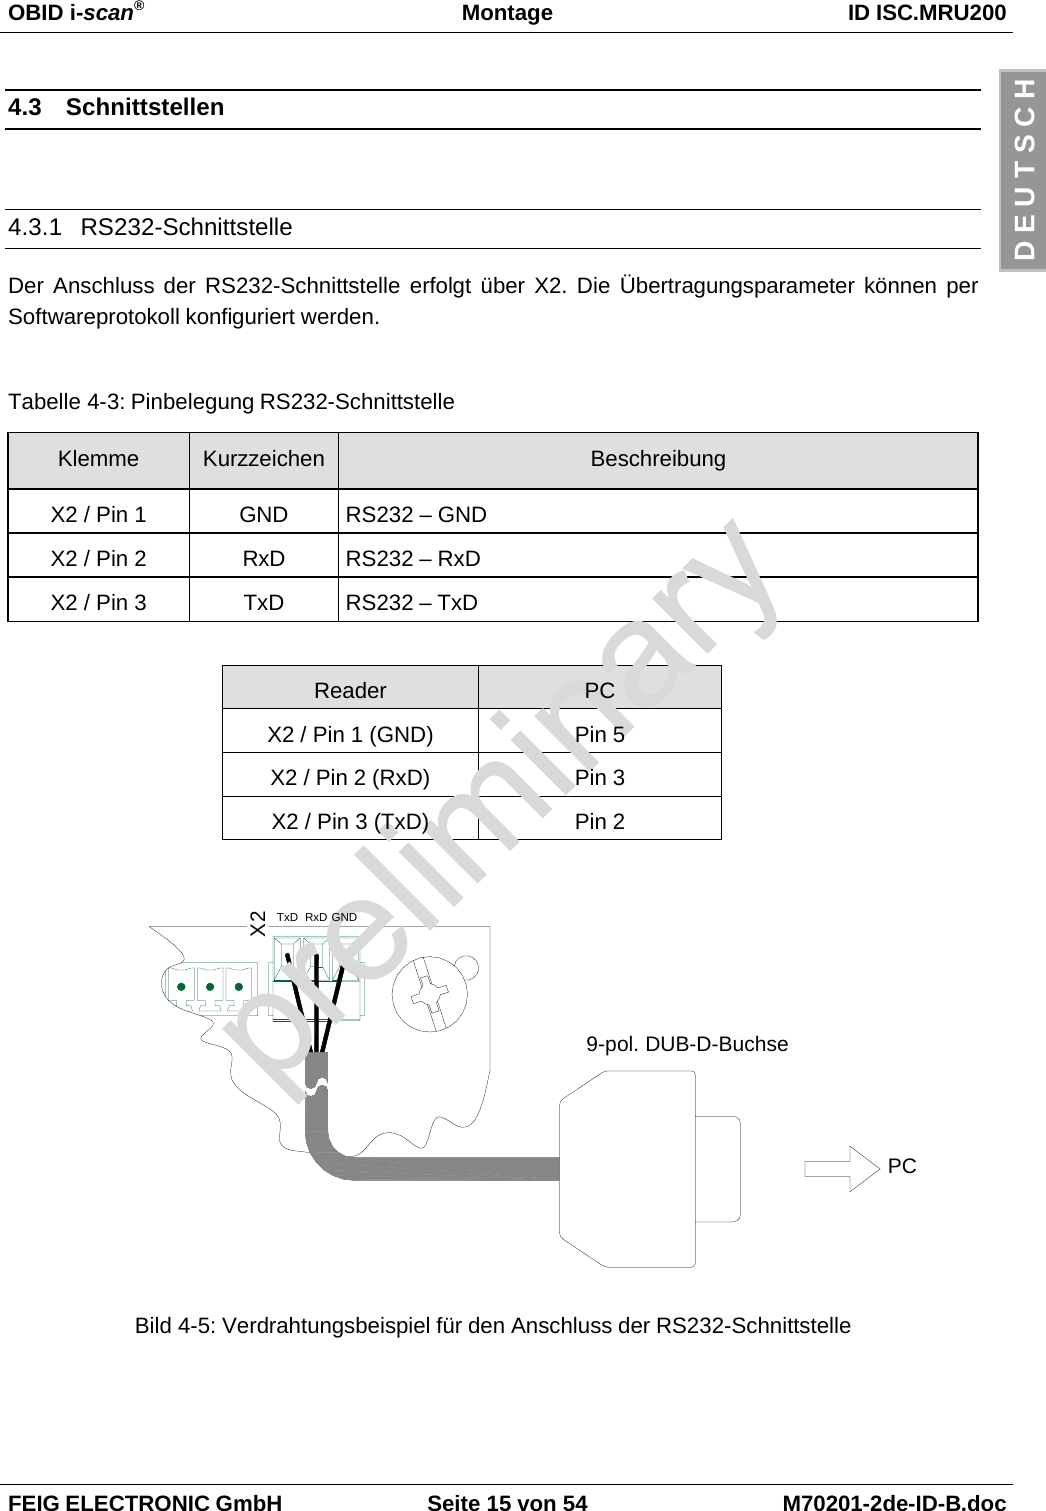 OBID i-scan®Montage ID ISC.MRU200FEIG ELECTRONIC GmbH Seite 15 von 54 M70201-2de-ID-B.docD E U T S C H4.3 Schnittstellen4.3.1 RS232-SchnittstelleDer Anschluss der RS232-Schnittstelle erfolgt über X2. Die Übertragungsparameter können perSoftwareprotokoll konfiguriert werden.Tabelle 4-3: Pinbelegung RS232-SchnittstelleKlemme Kurzzeichen BeschreibungX2 / Pin 1 GND RS232 – GNDX2 / Pin 2 RxD RS232 – RxDX2 / Pin 3 TxD RS232 – TxDReader PCX2 / Pin 1 (GND) Pin 5X2 / Pin 2 (RxD) Pin 3X2 / Pin 3 (TxD) Pin 2Bild 4-5: Verdrahtungsbeispiel für den Anschluss der RS232-SchnittstelleX2TxD RxD GNDPC9-pol. DUB-D-Buchse